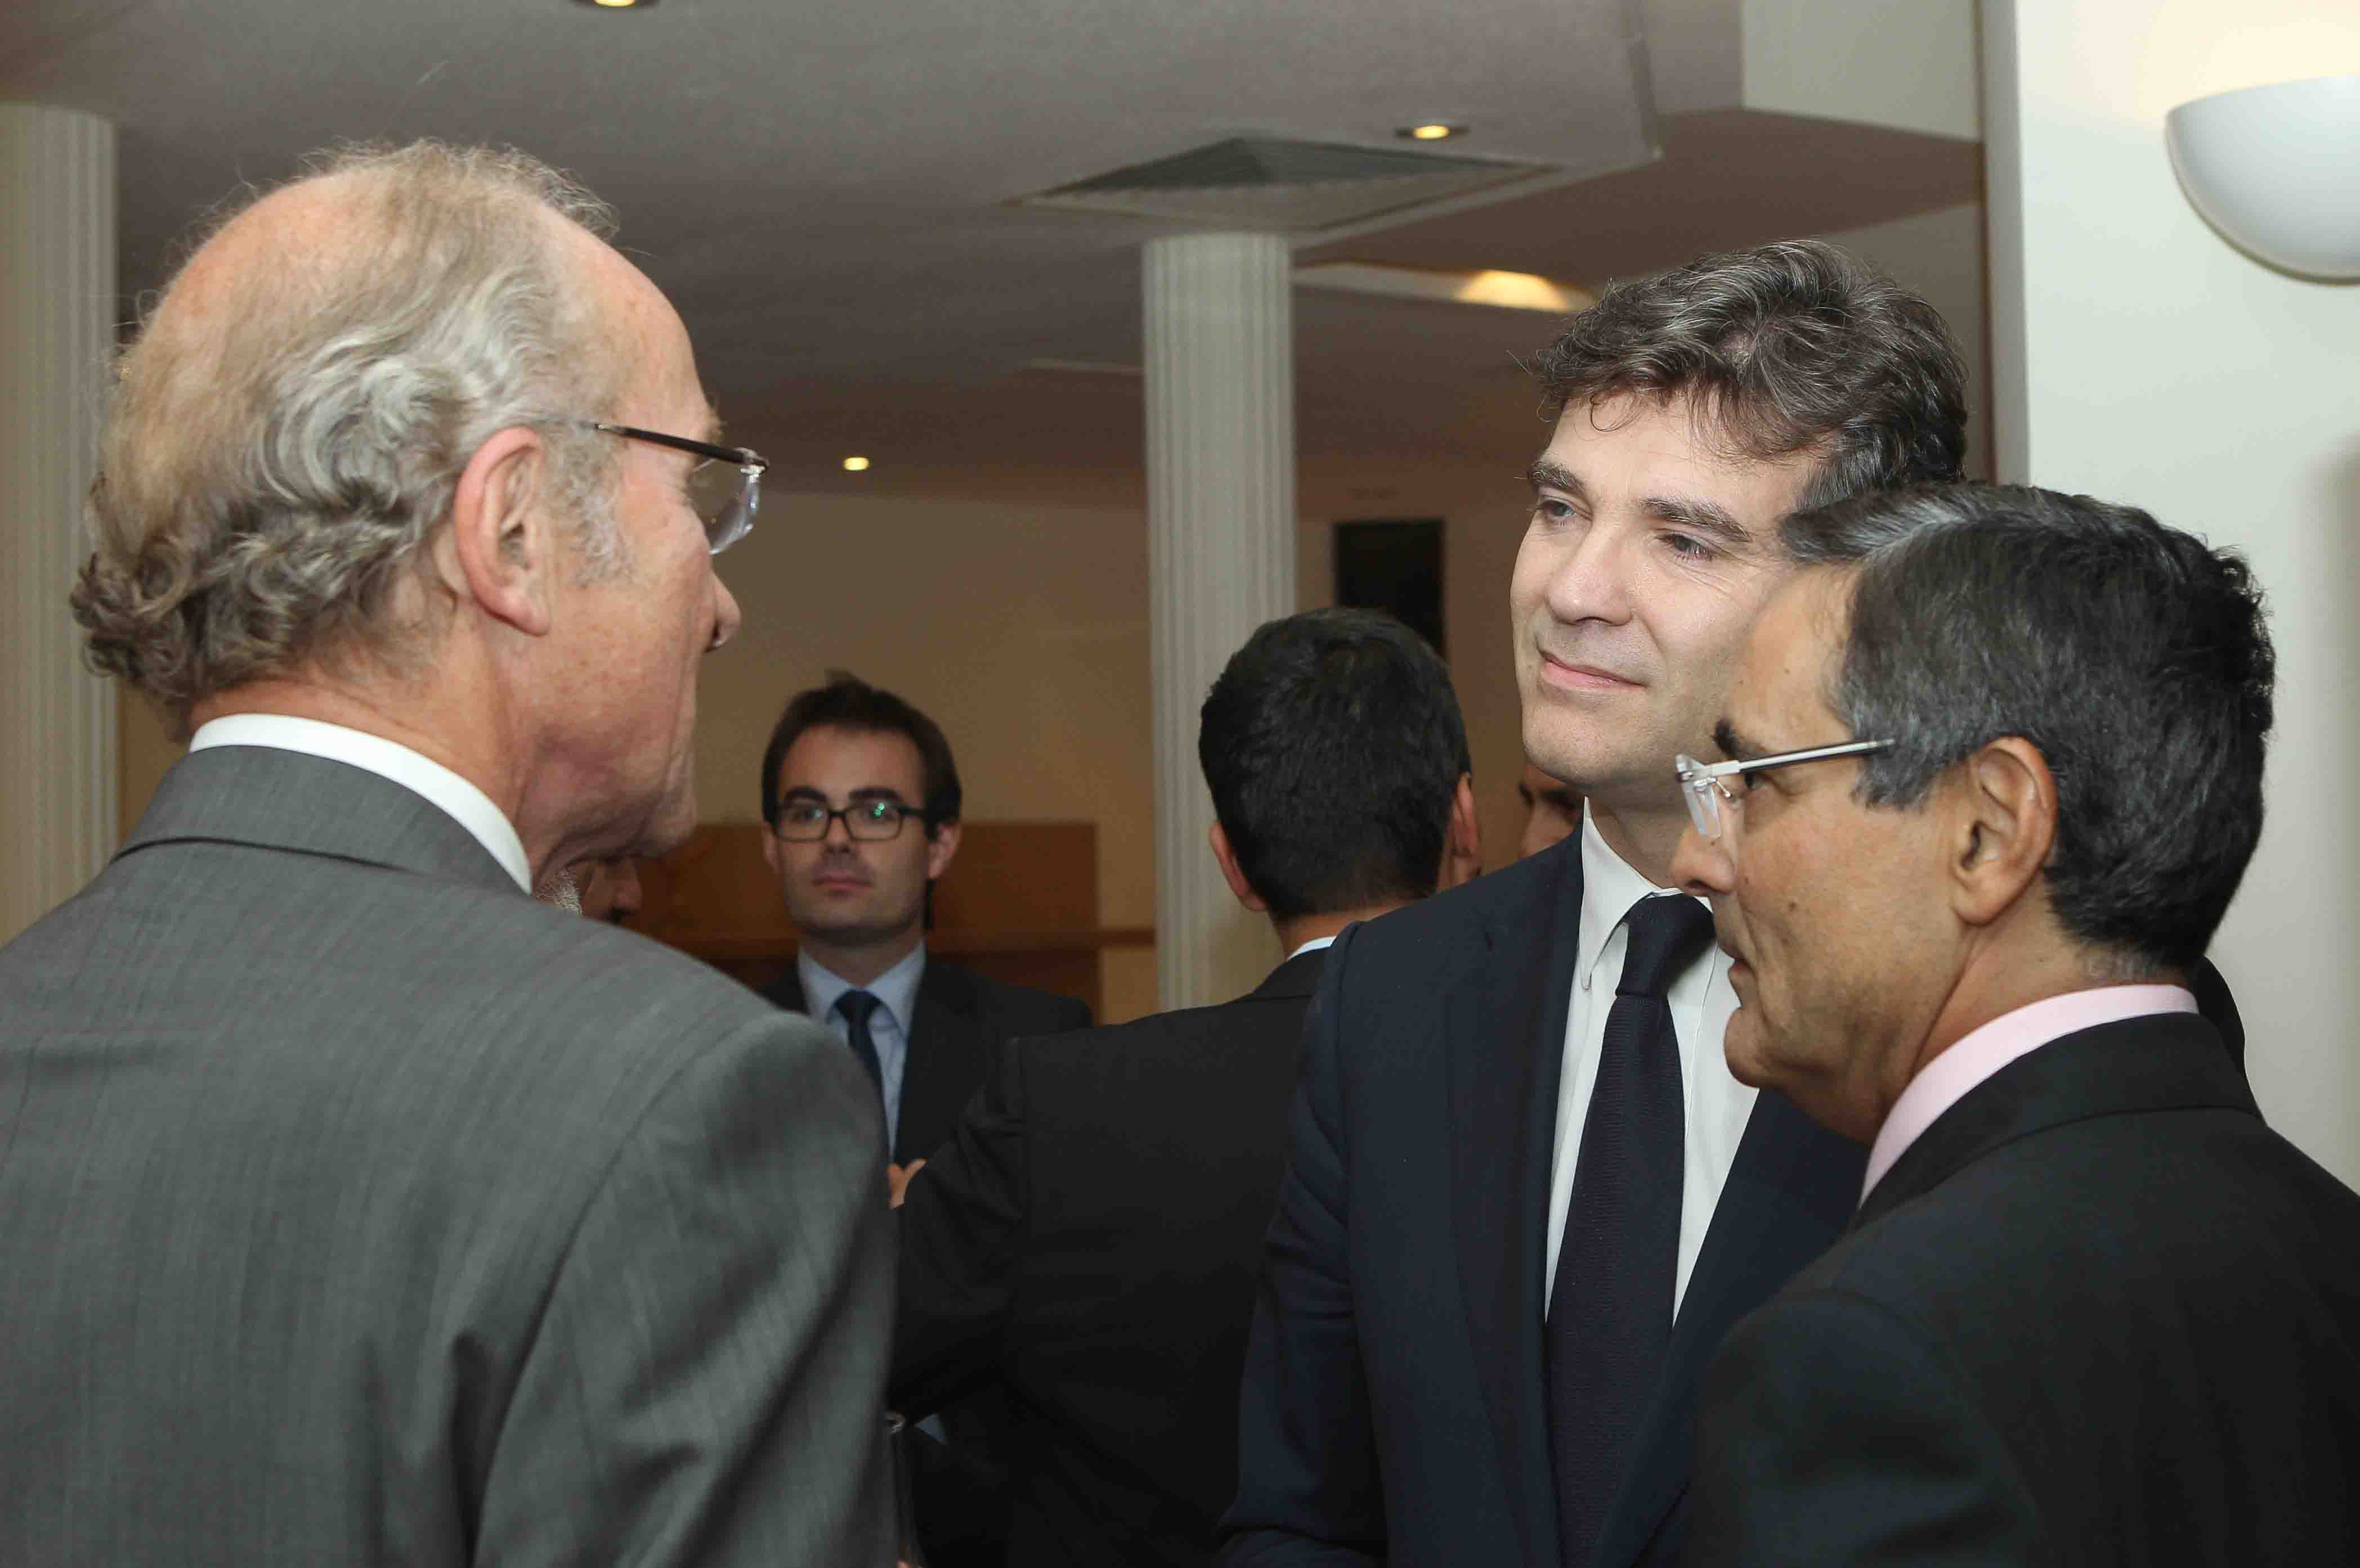 Minister MONTEBOURG exchange with ECC Dubaï’s partner